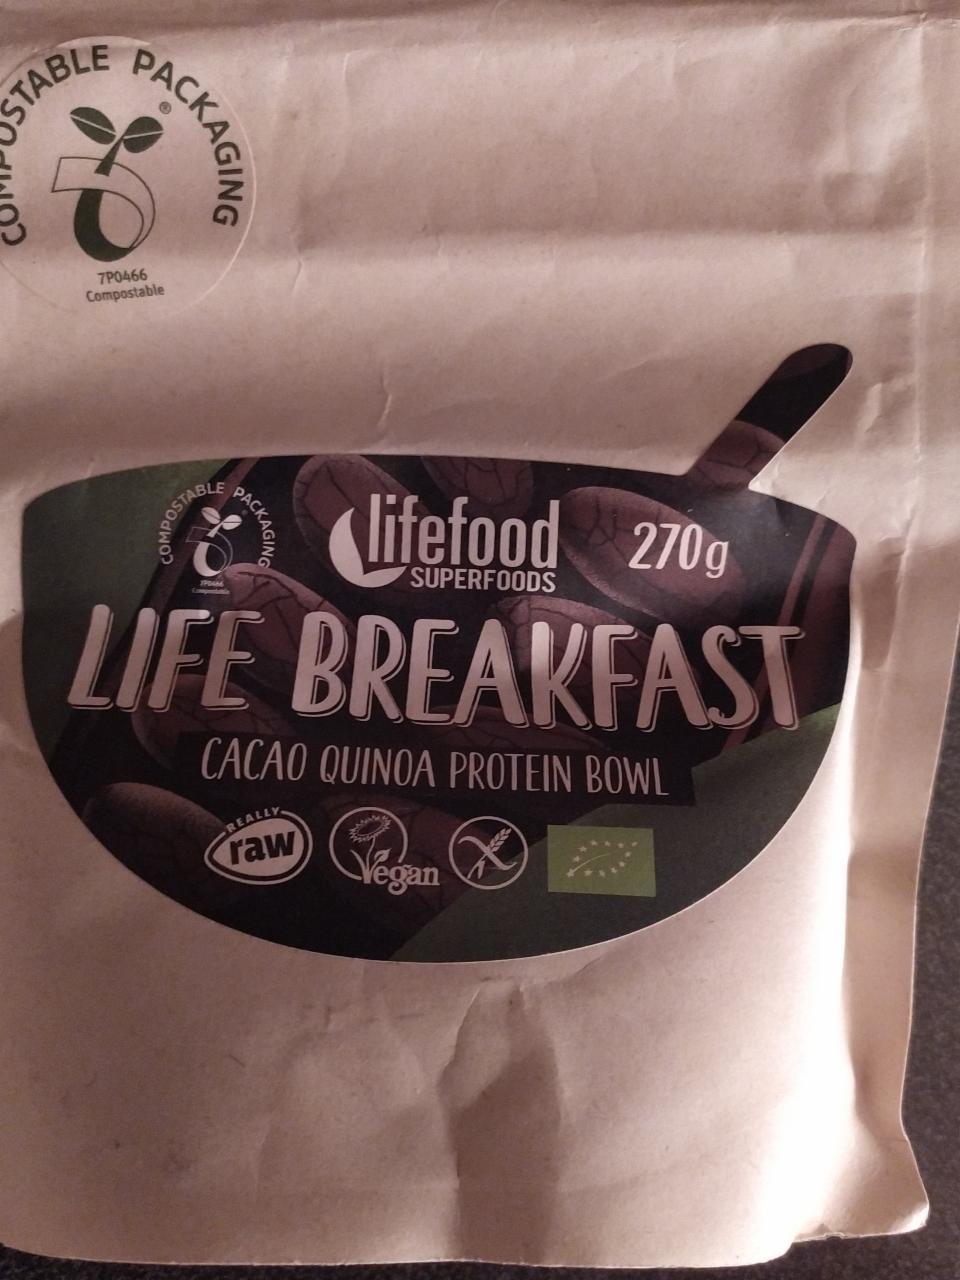 Fotografie - Bio Life Breakfast cacao quinoa protein bowl Lifefood